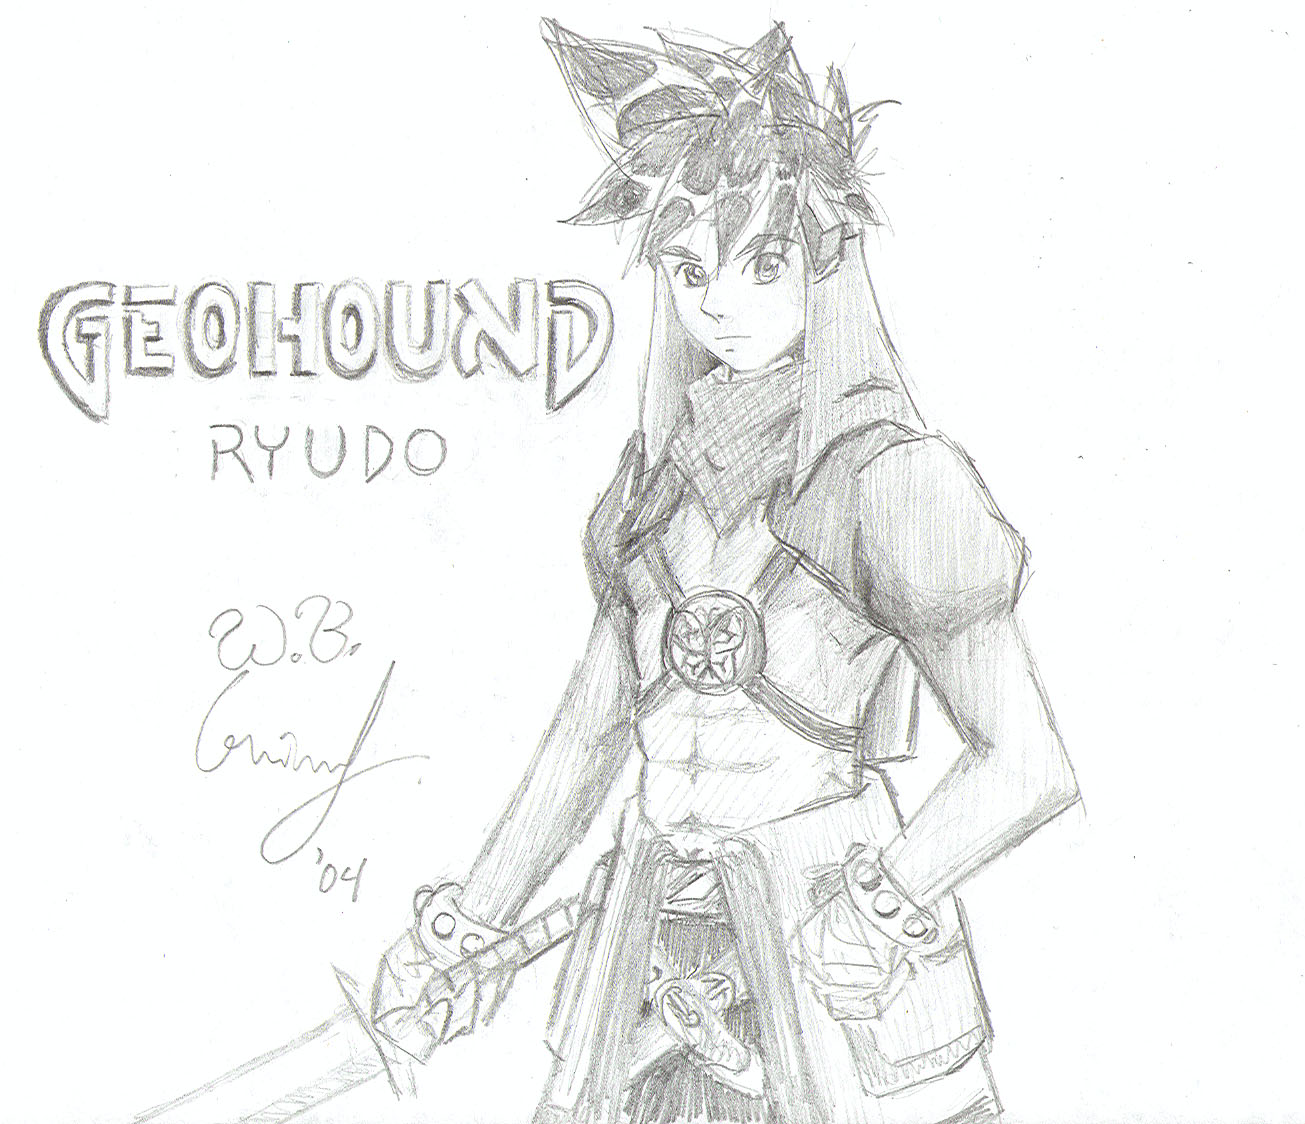 Geohound Ryudo by WillieB